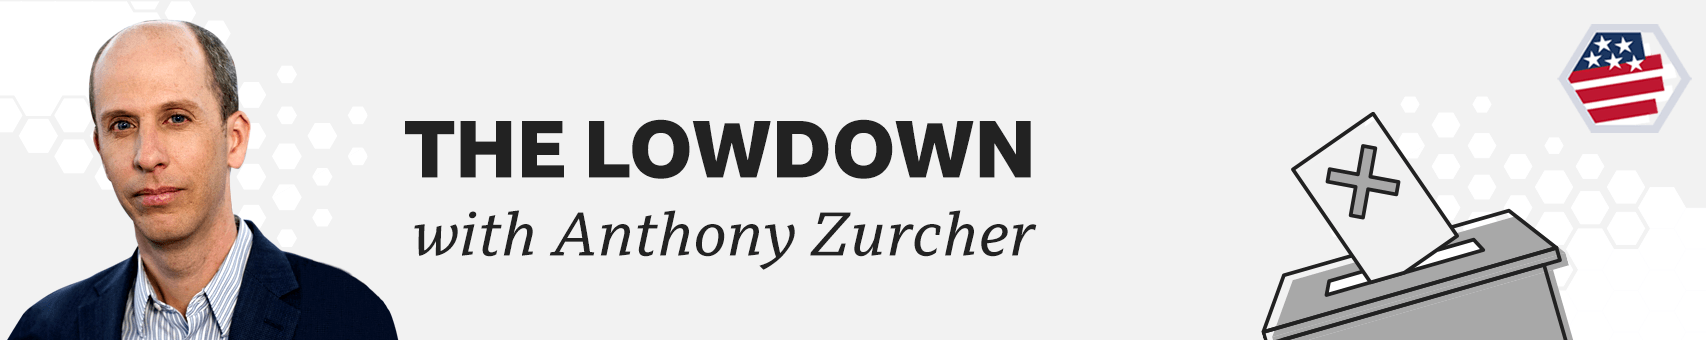 The Lowdown branding